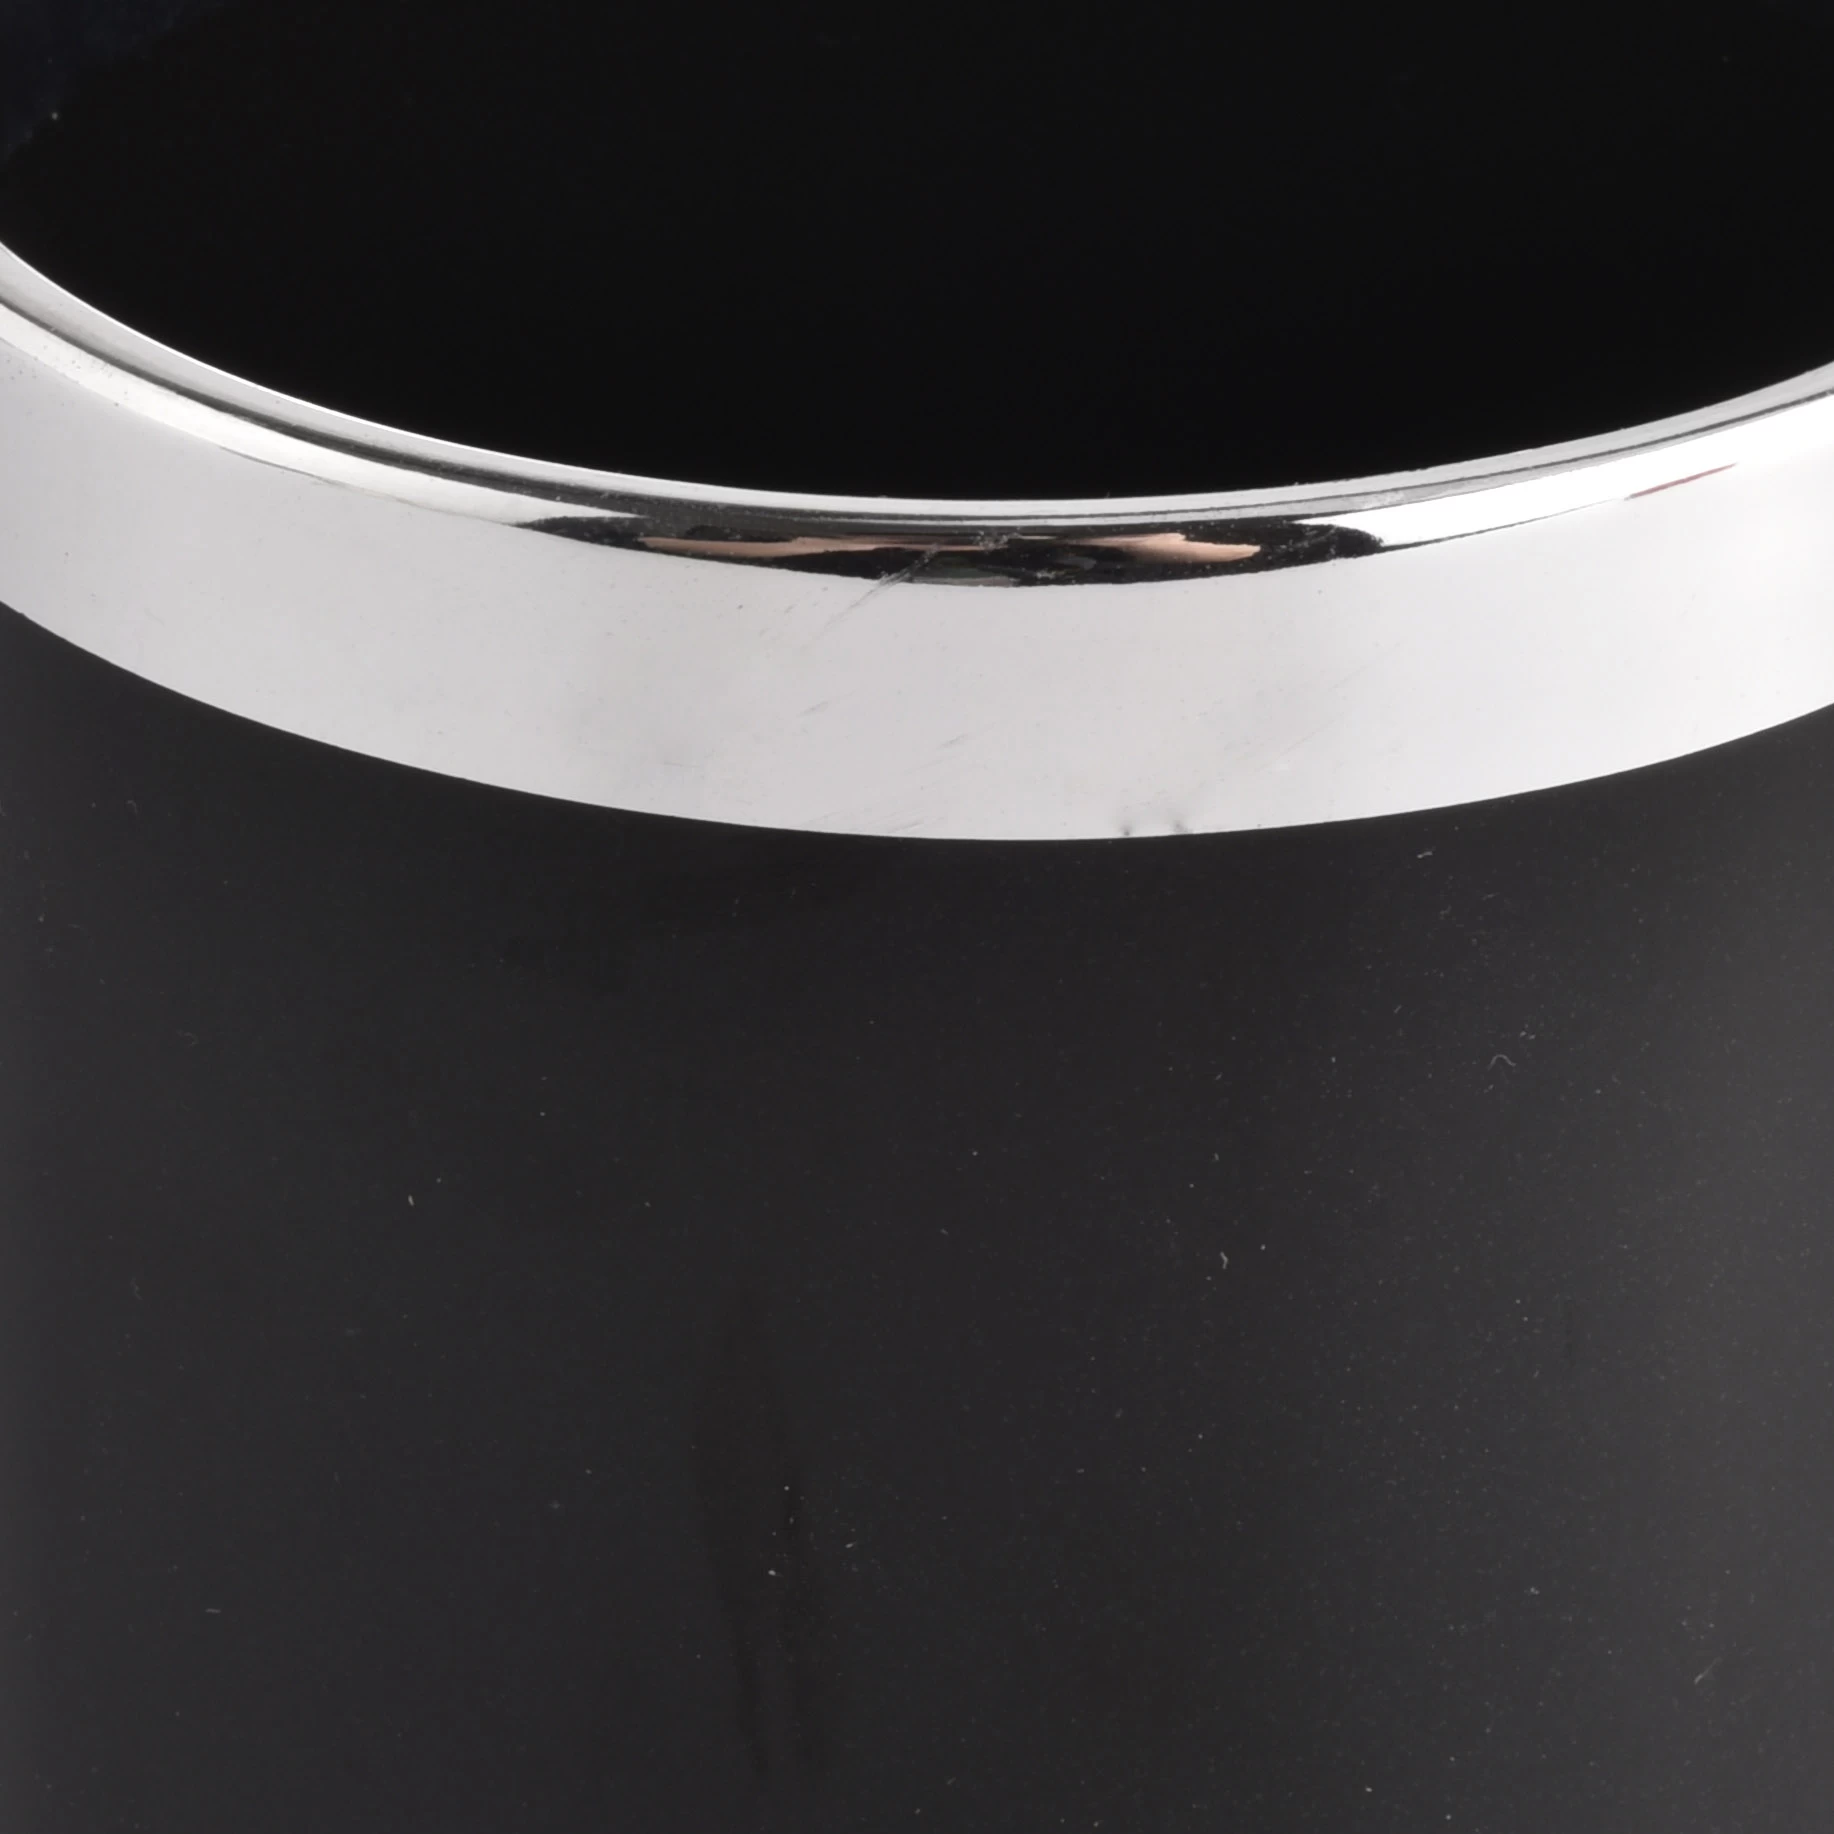 Black Ceramic Candle Jars With Silver Rim